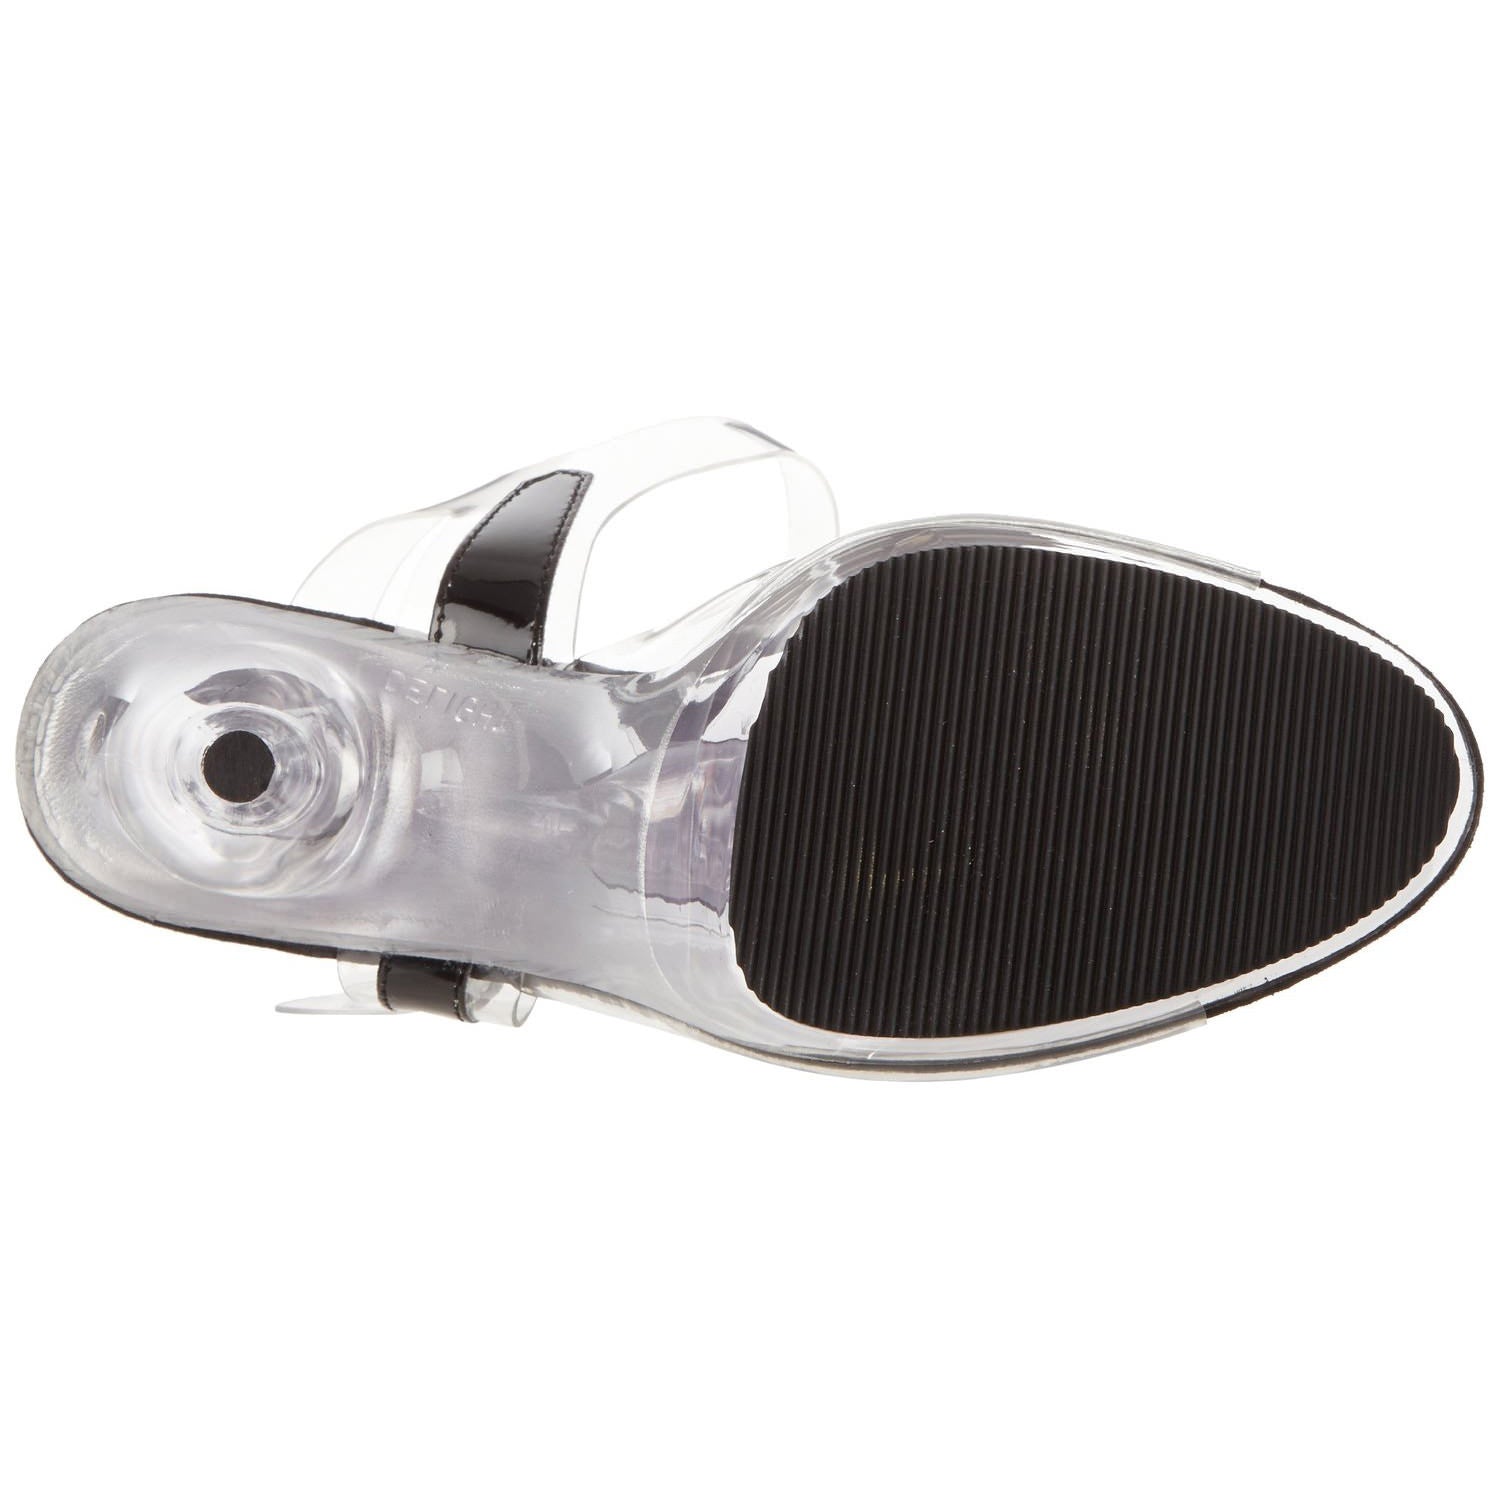 PLEASER DELIGHT-608 Clear-Black-Clear Ankle Strap Sandals - Shoecup.com - 7